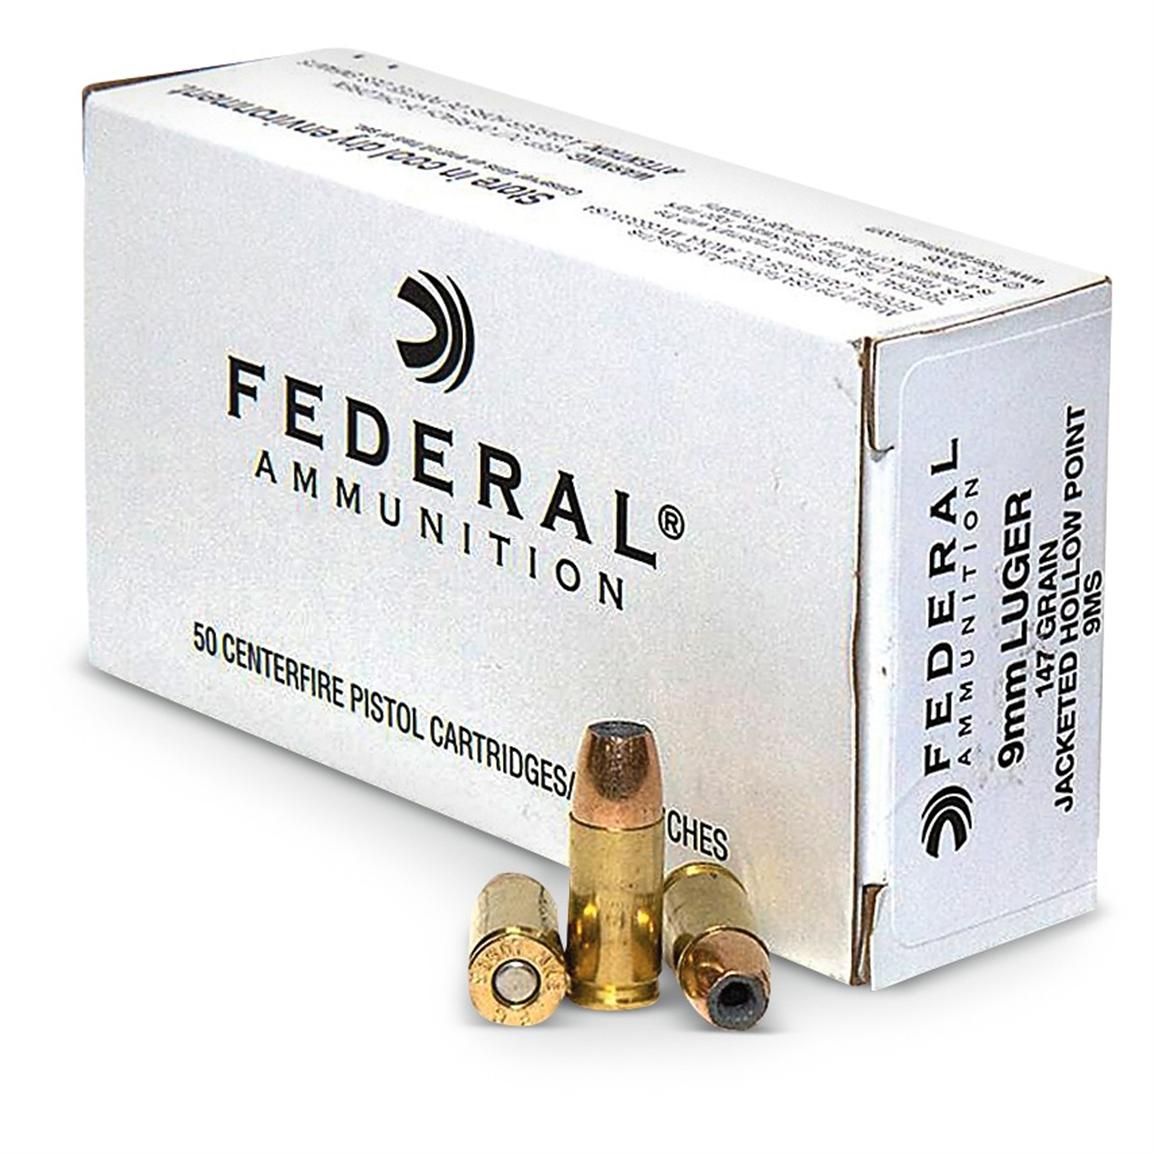 Federal Ammunition Hunting Shooting Rifle Pistol Bullet Black T-shirt Size S-5XL